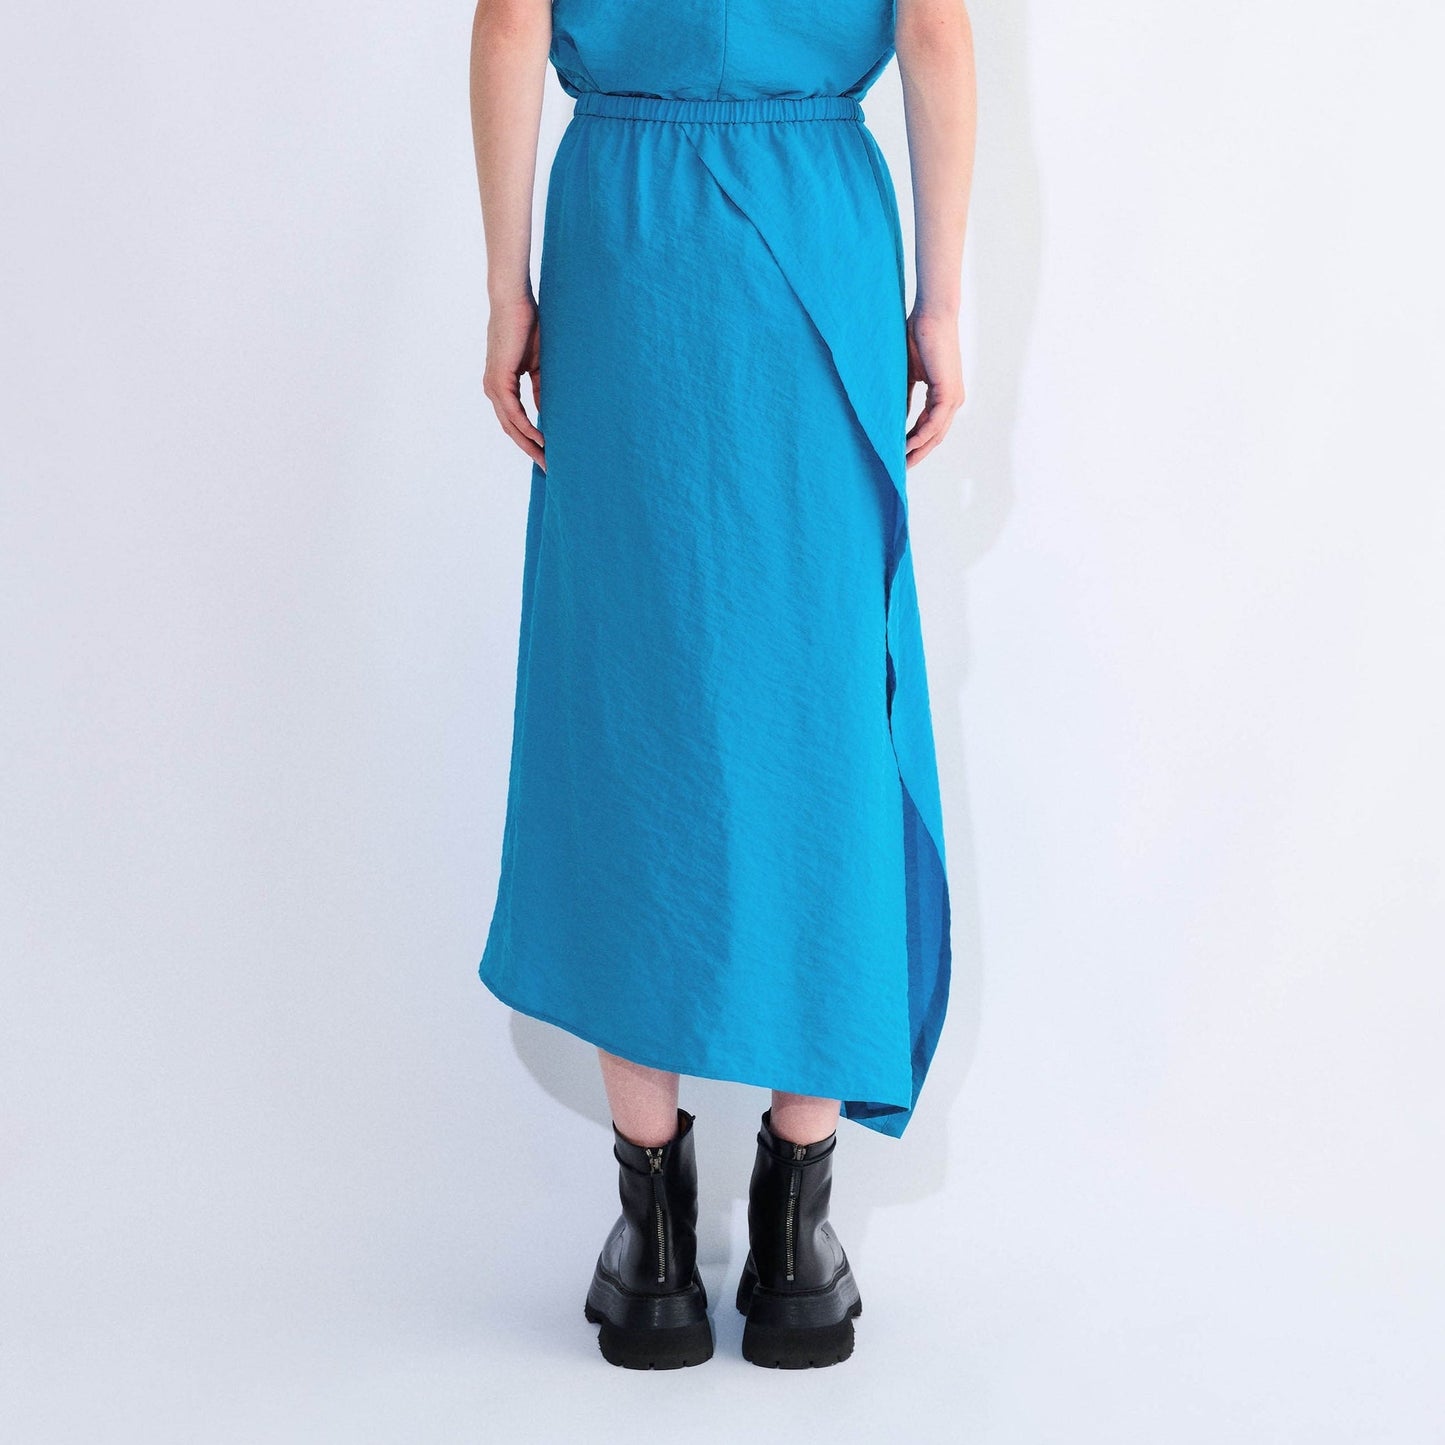 Suma Asymmetrical Skirt in Azure